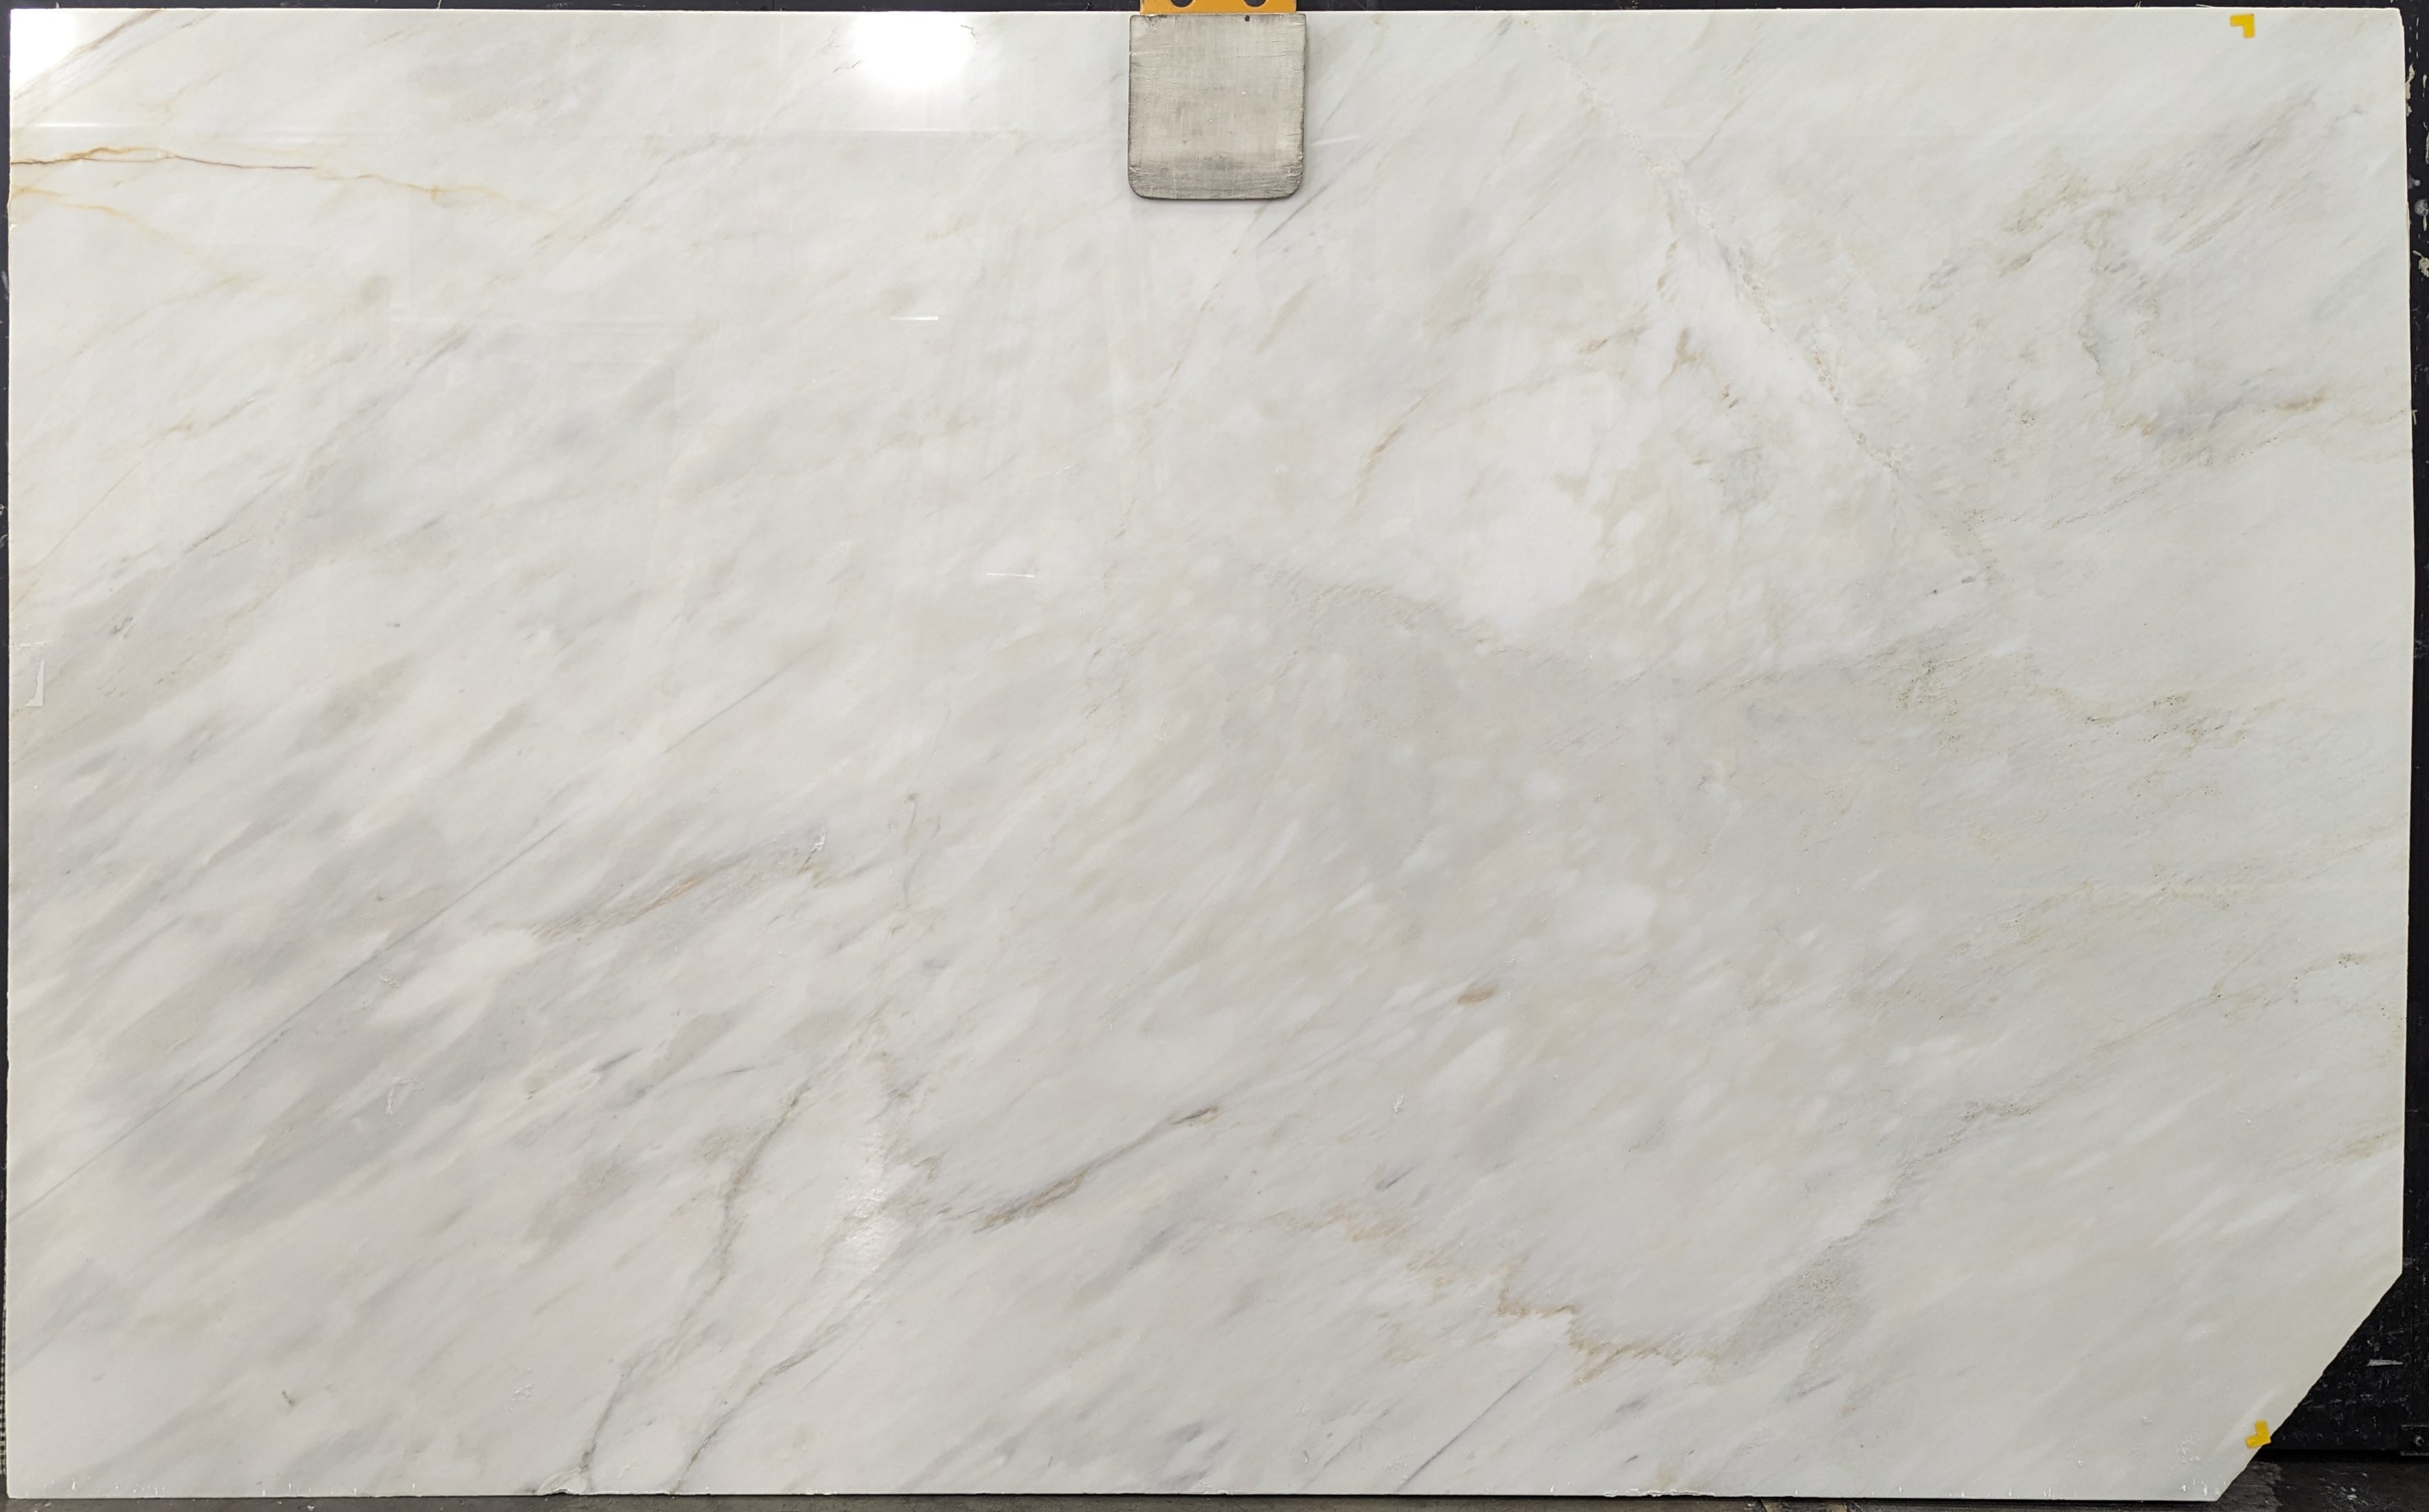  Calacatta Cremo Marble Slab 3/4  Polished Stone - 11726#30 -  68X106 